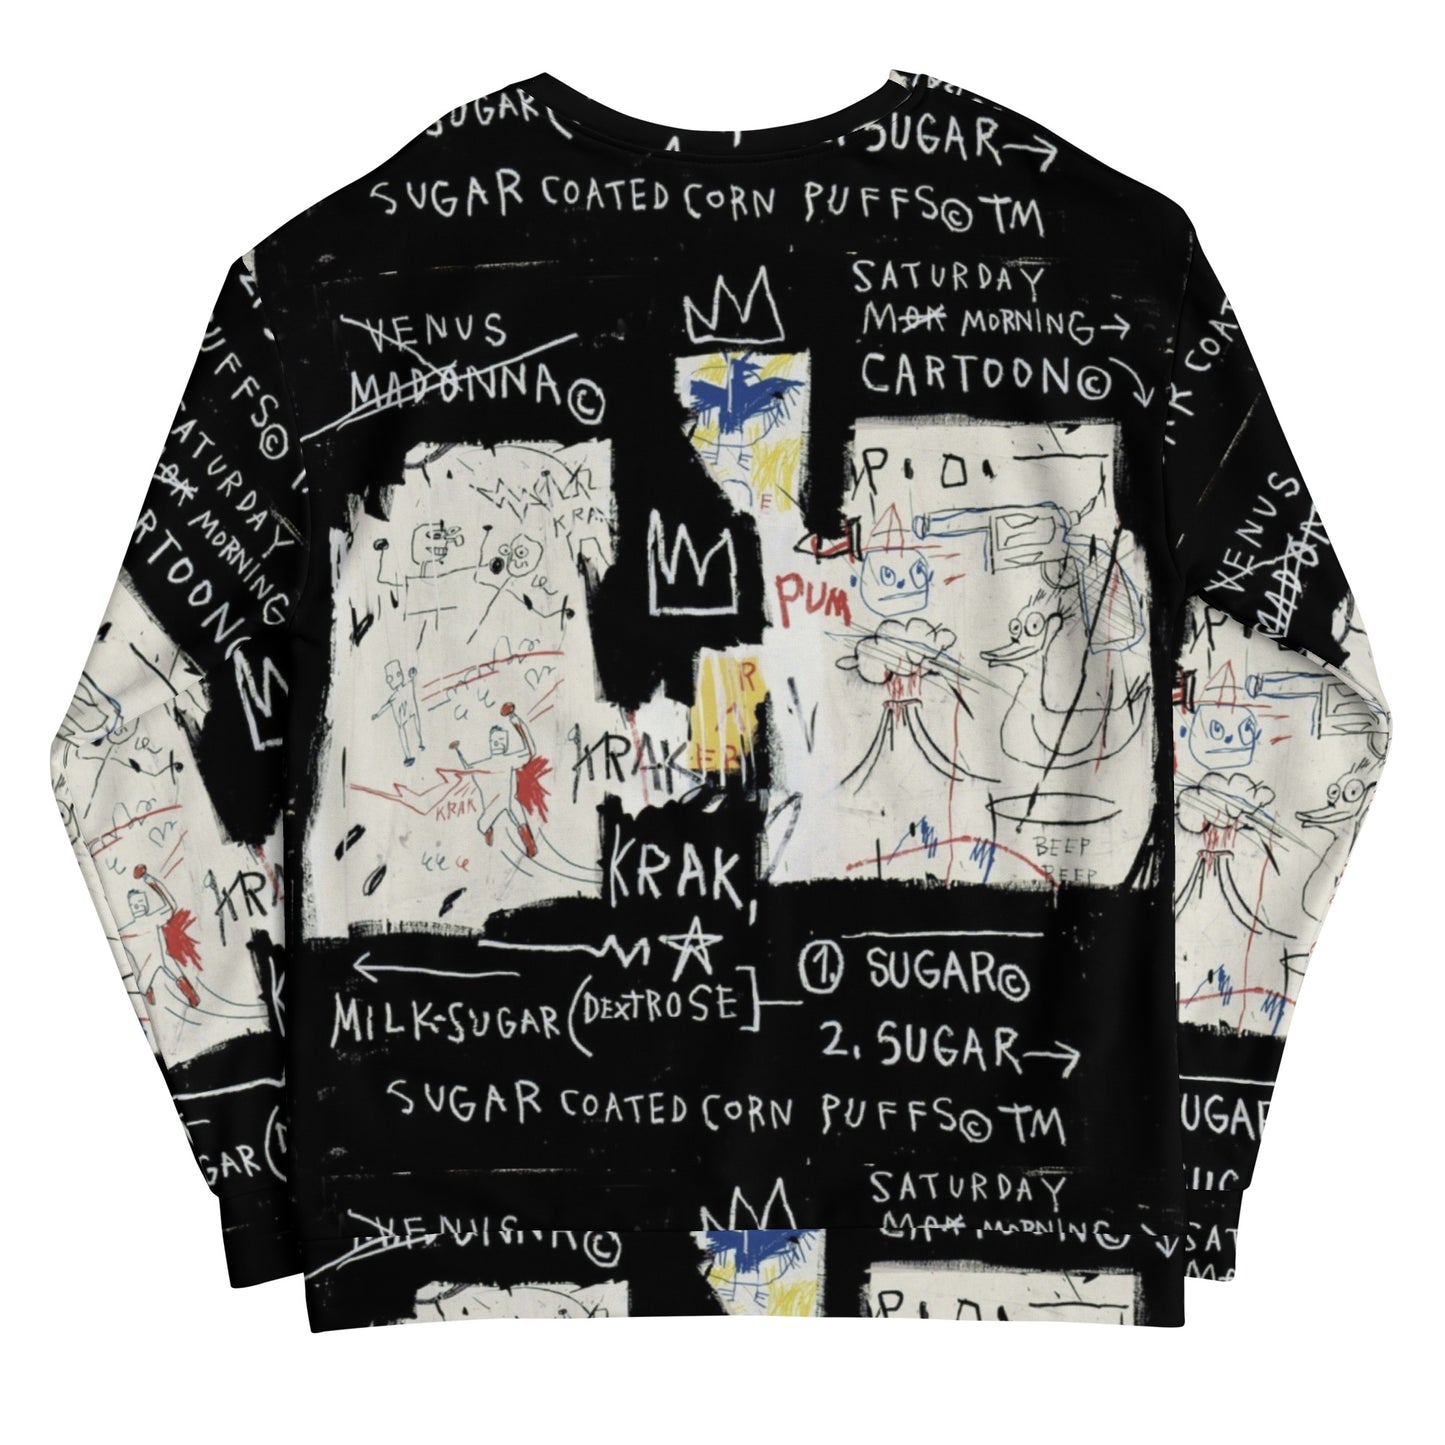 Jean-Michel Basquiat "A Panel of Experts" Artwork Printed Premium Streetwear Crewneck Sweatshirt Harajuku Graffiti